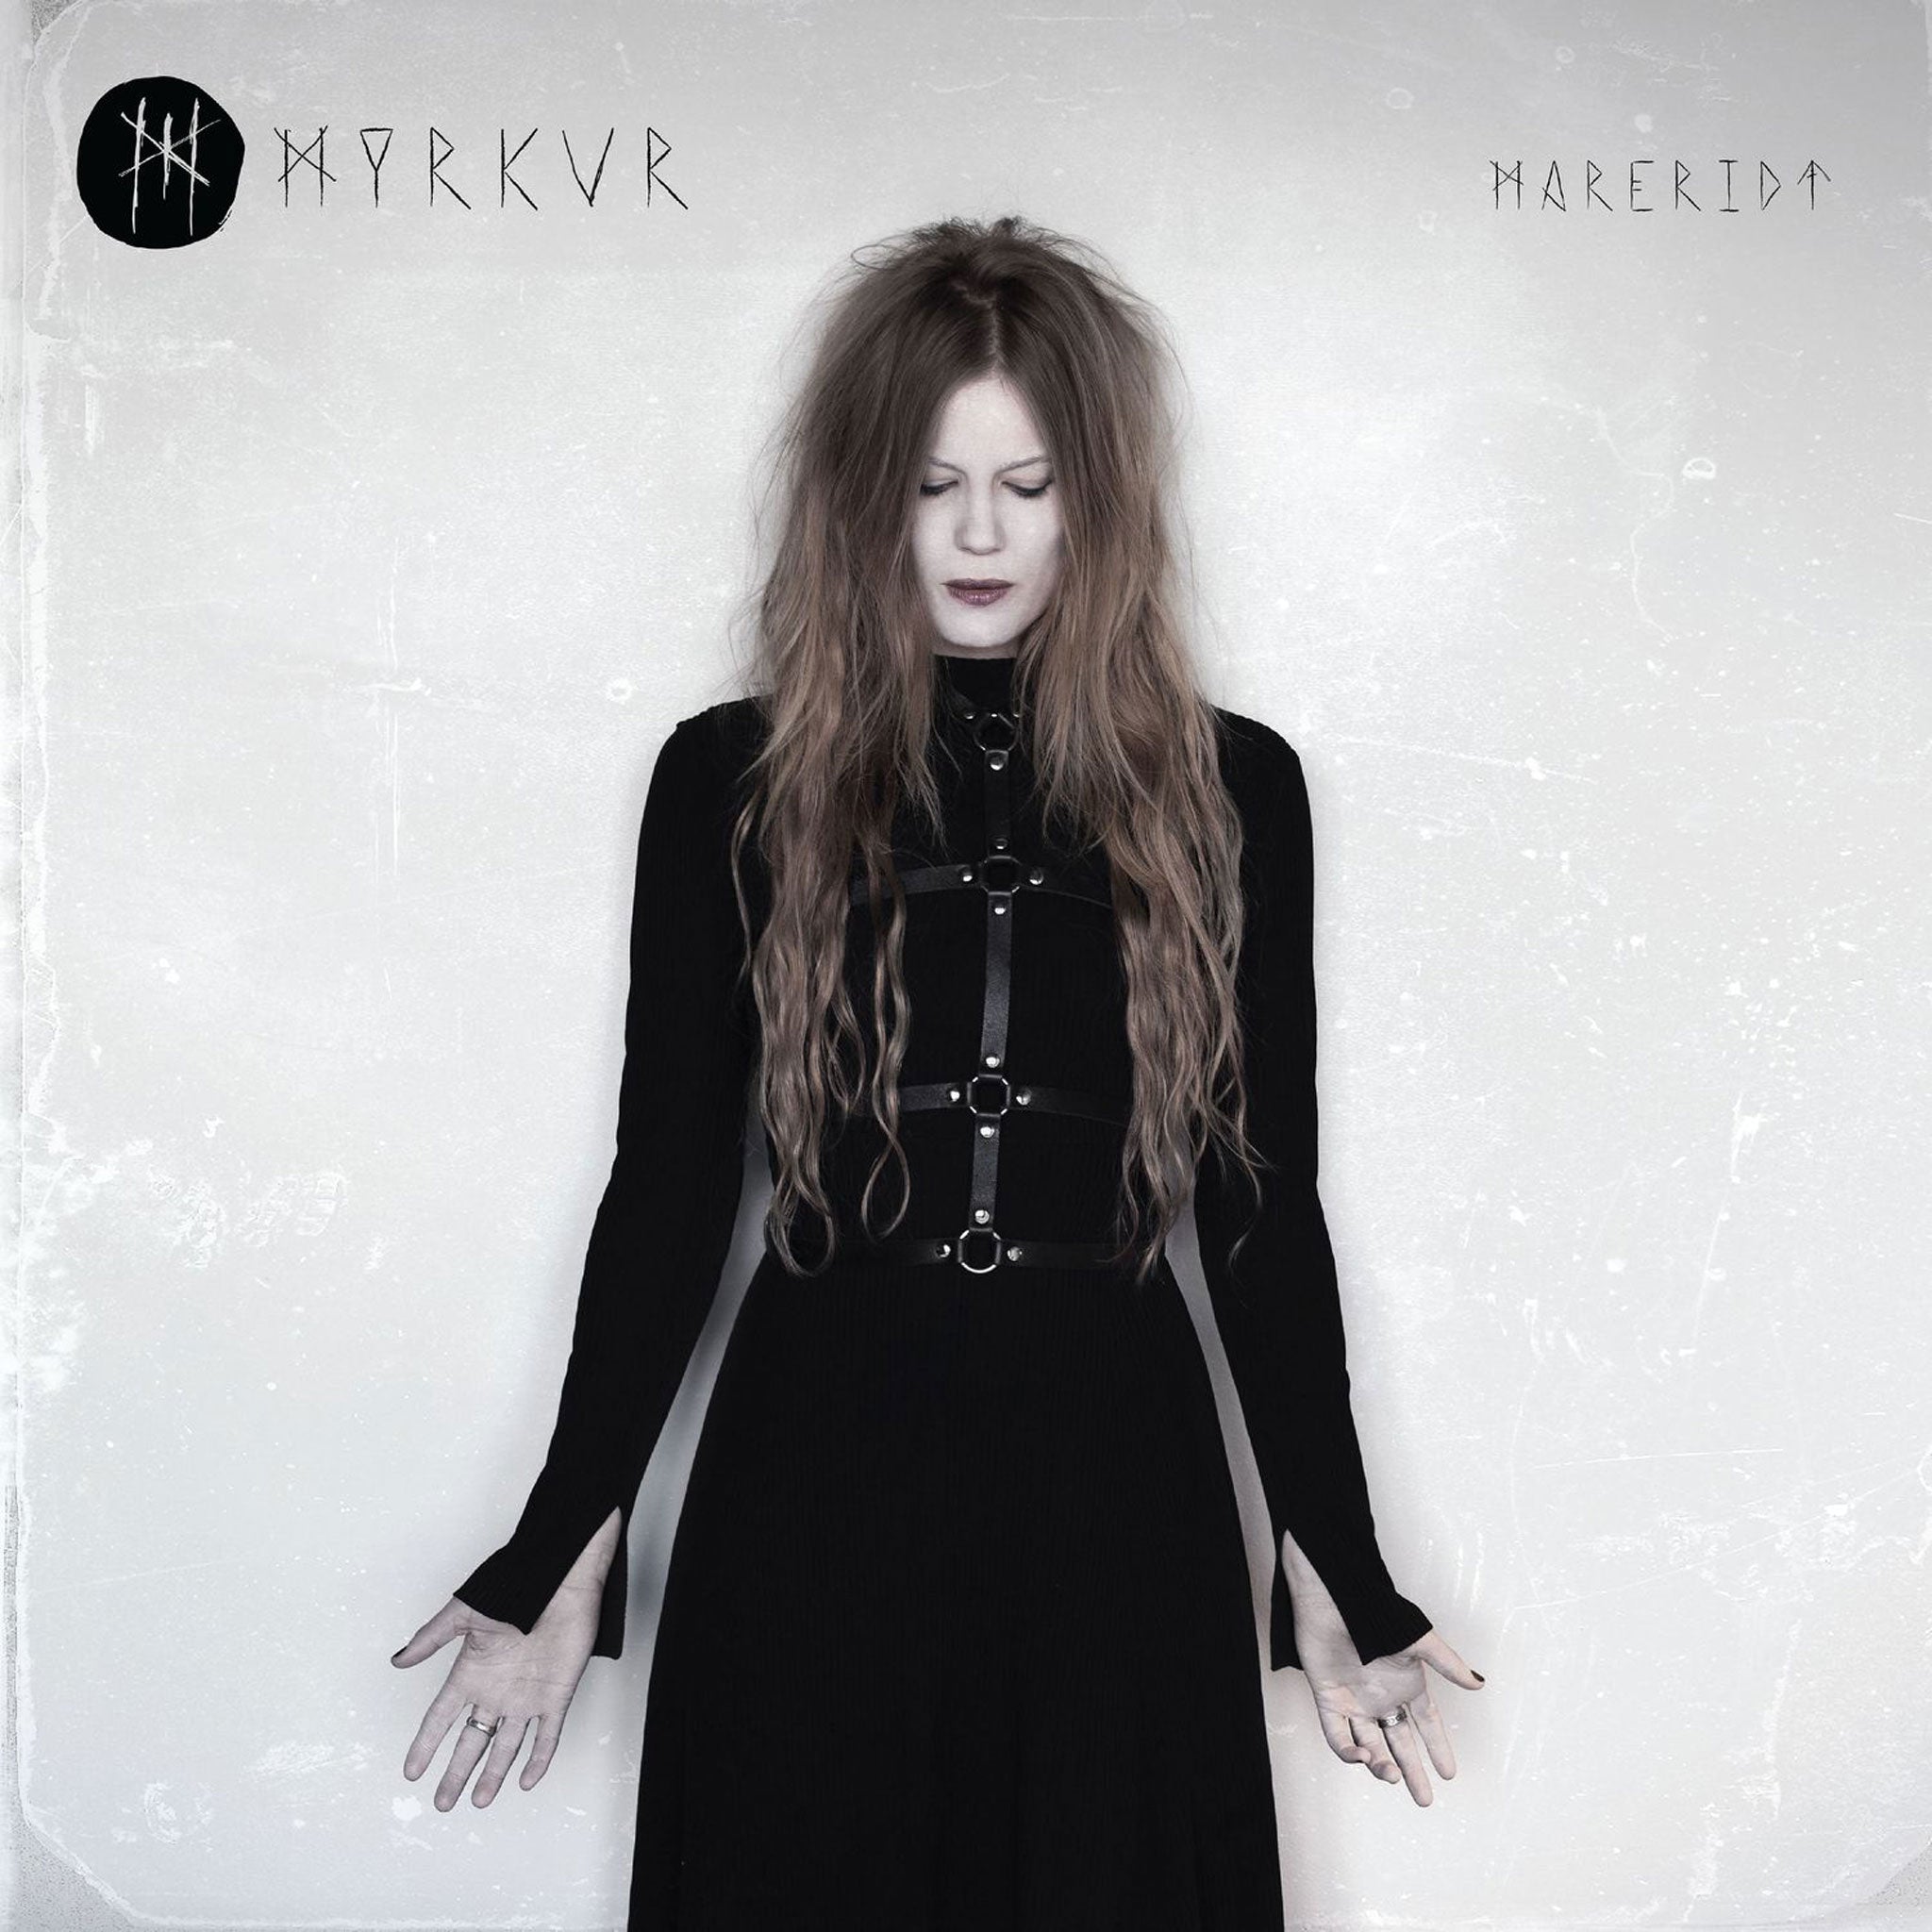 Myrkur - Mareridt (CD)